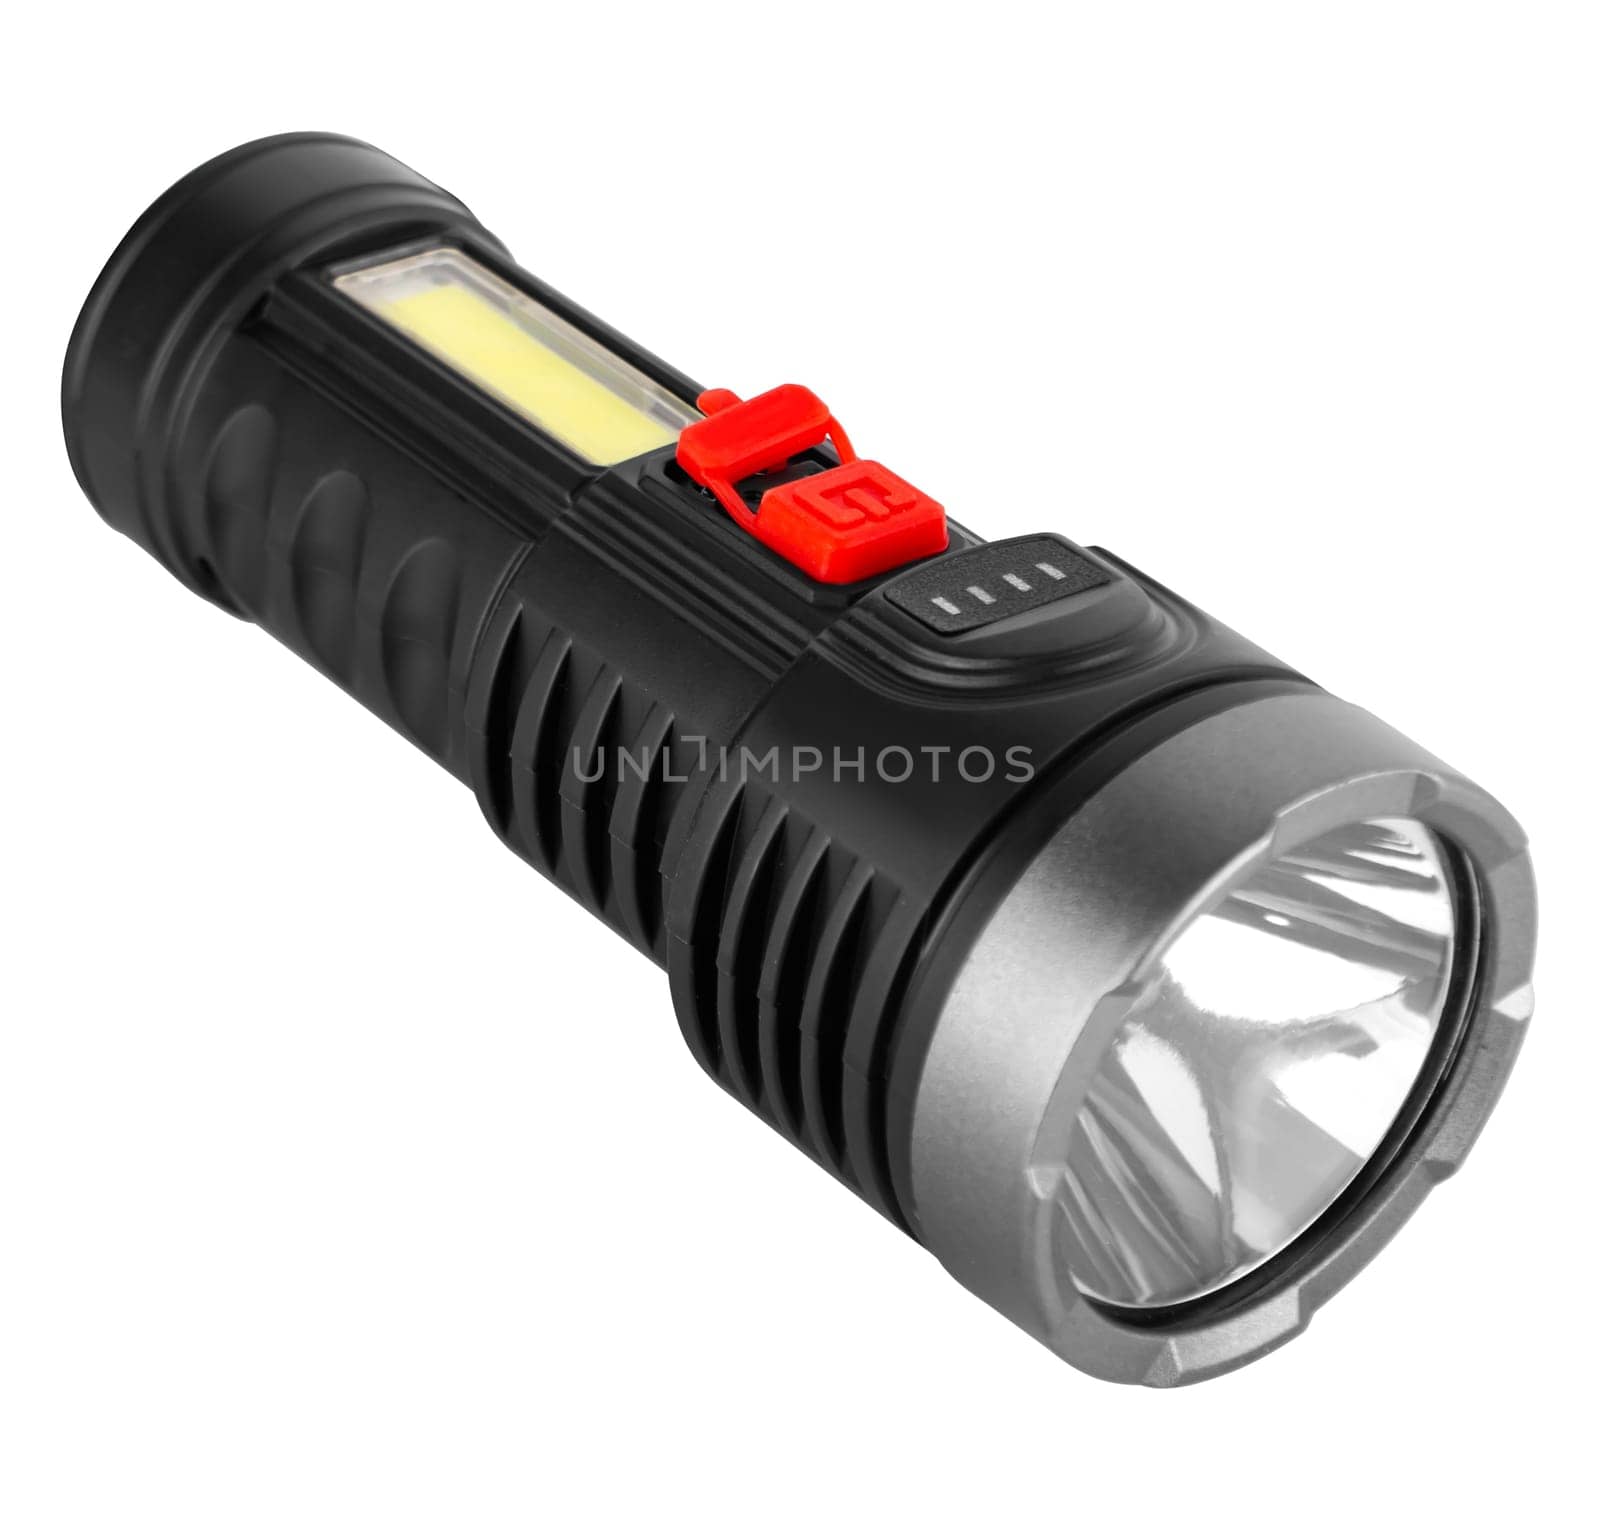 Hand-held LED flashlight white background in insulation